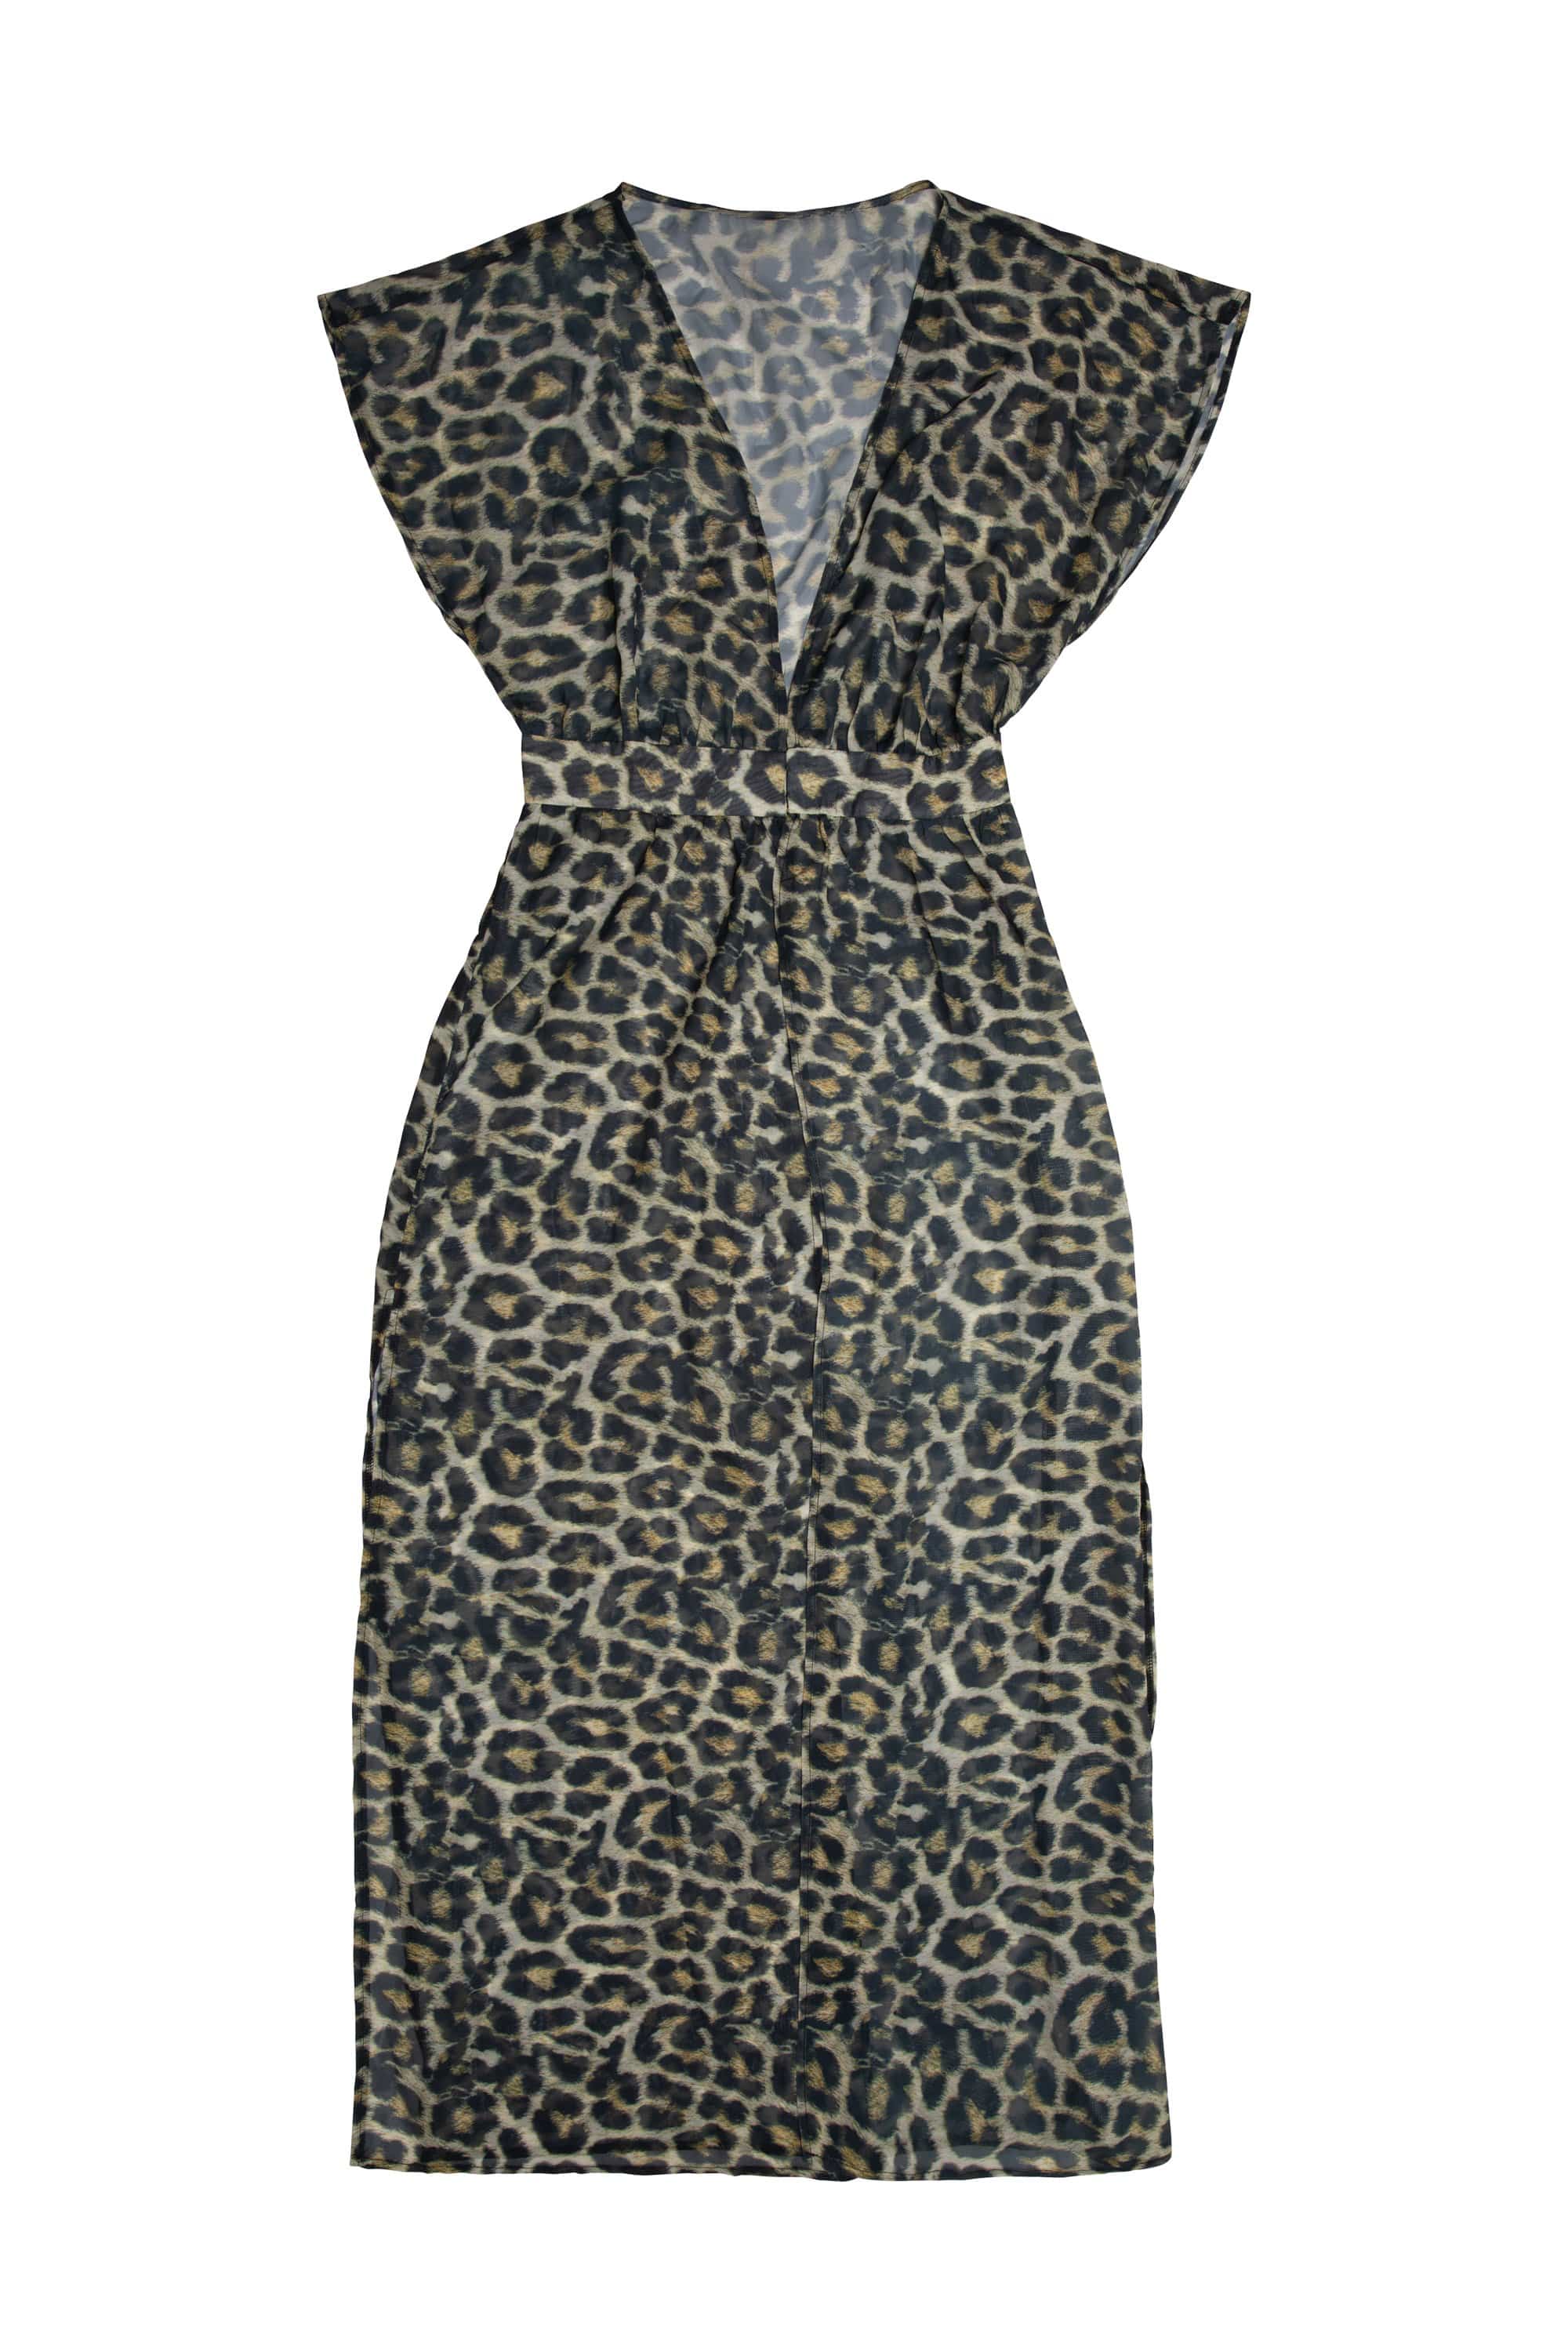 Leopard Print Maxi Cover up Beach Dress